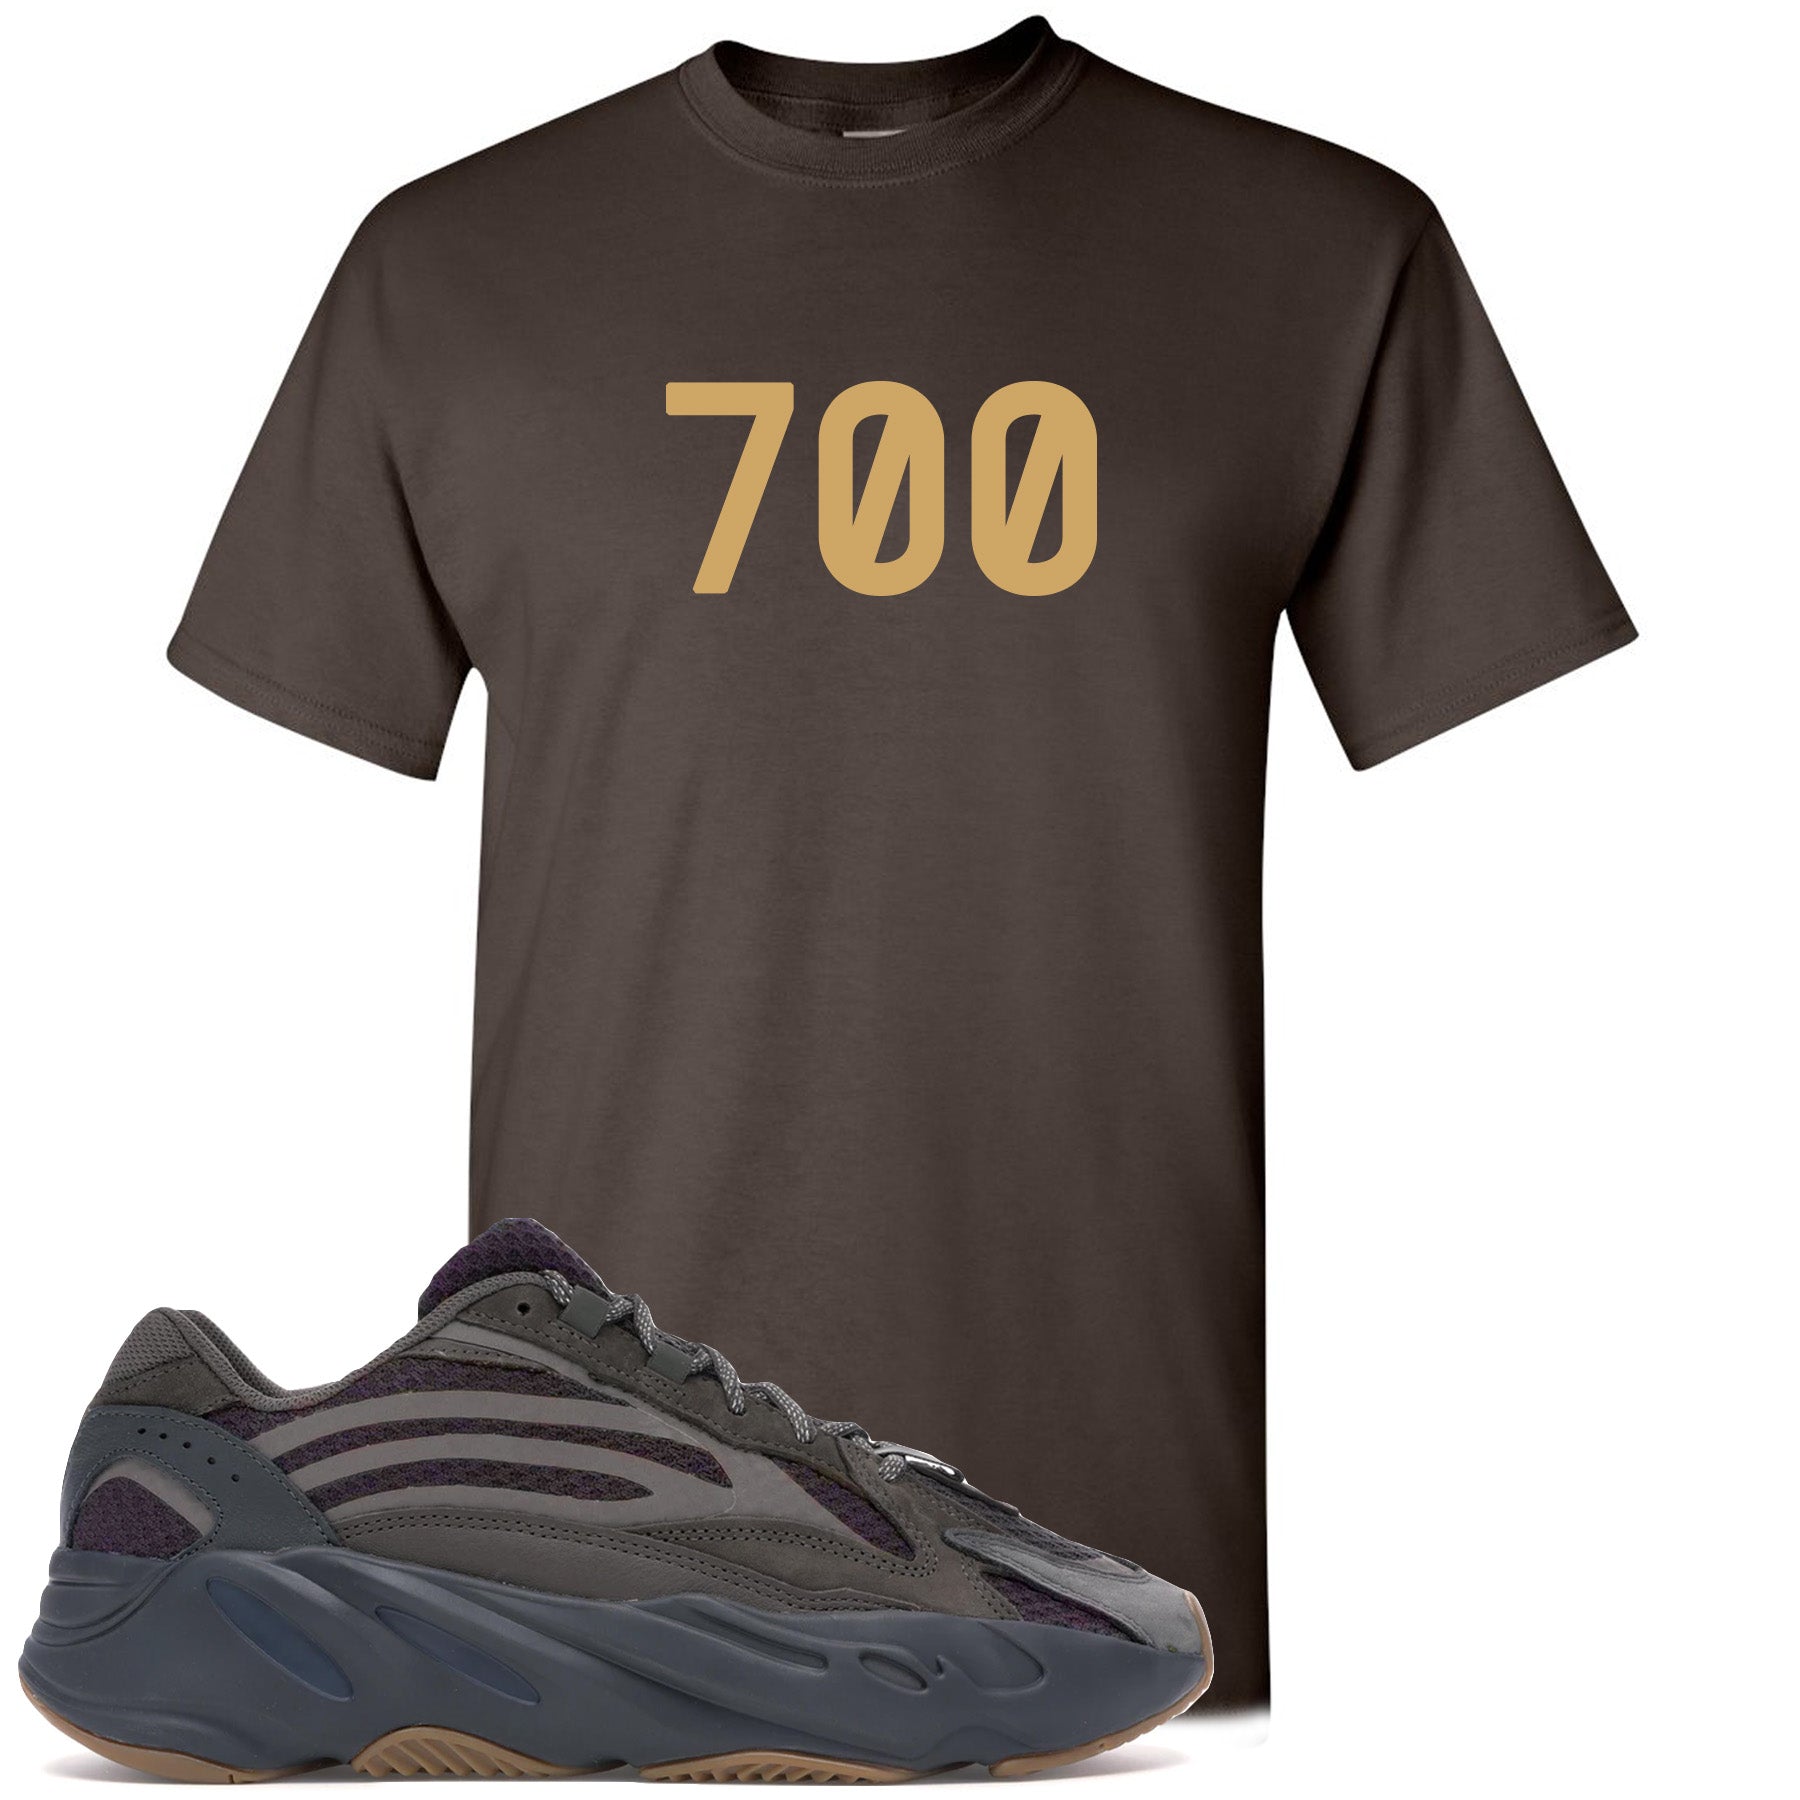 yeezy 700 geode shirt